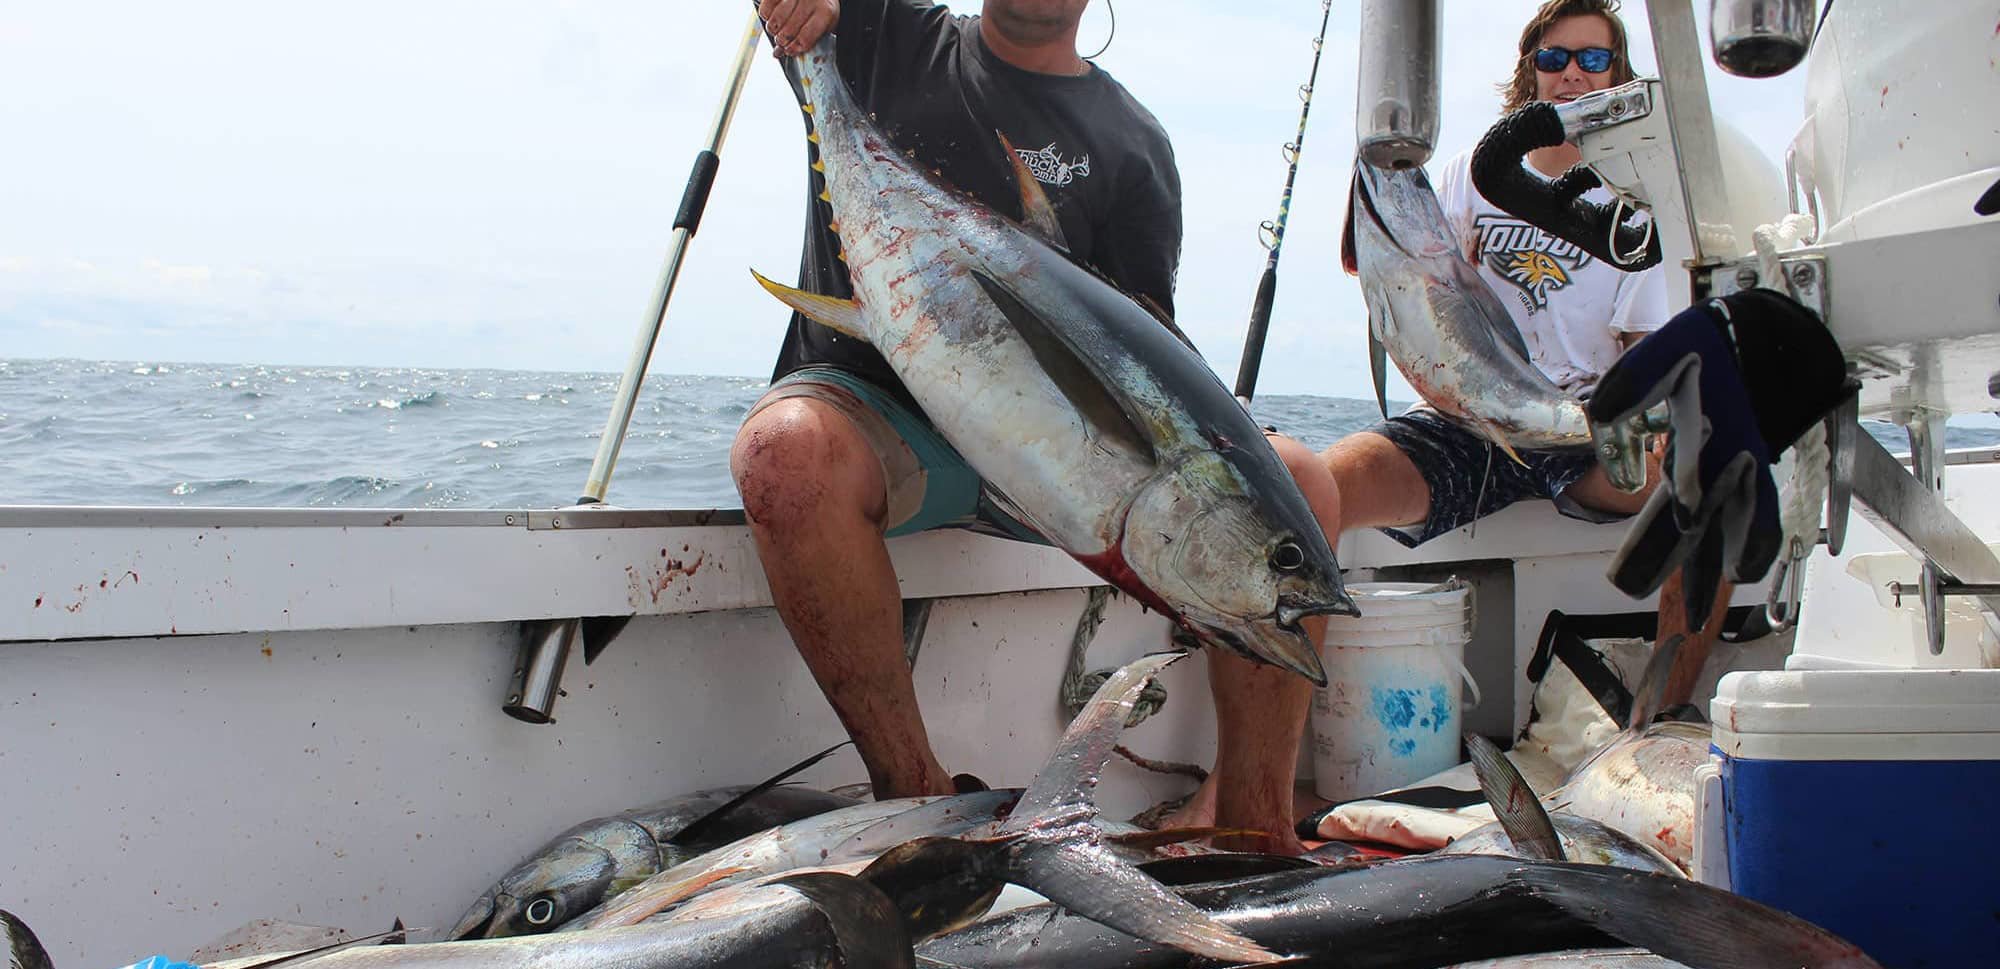 A boat full of freshly caught Tuna